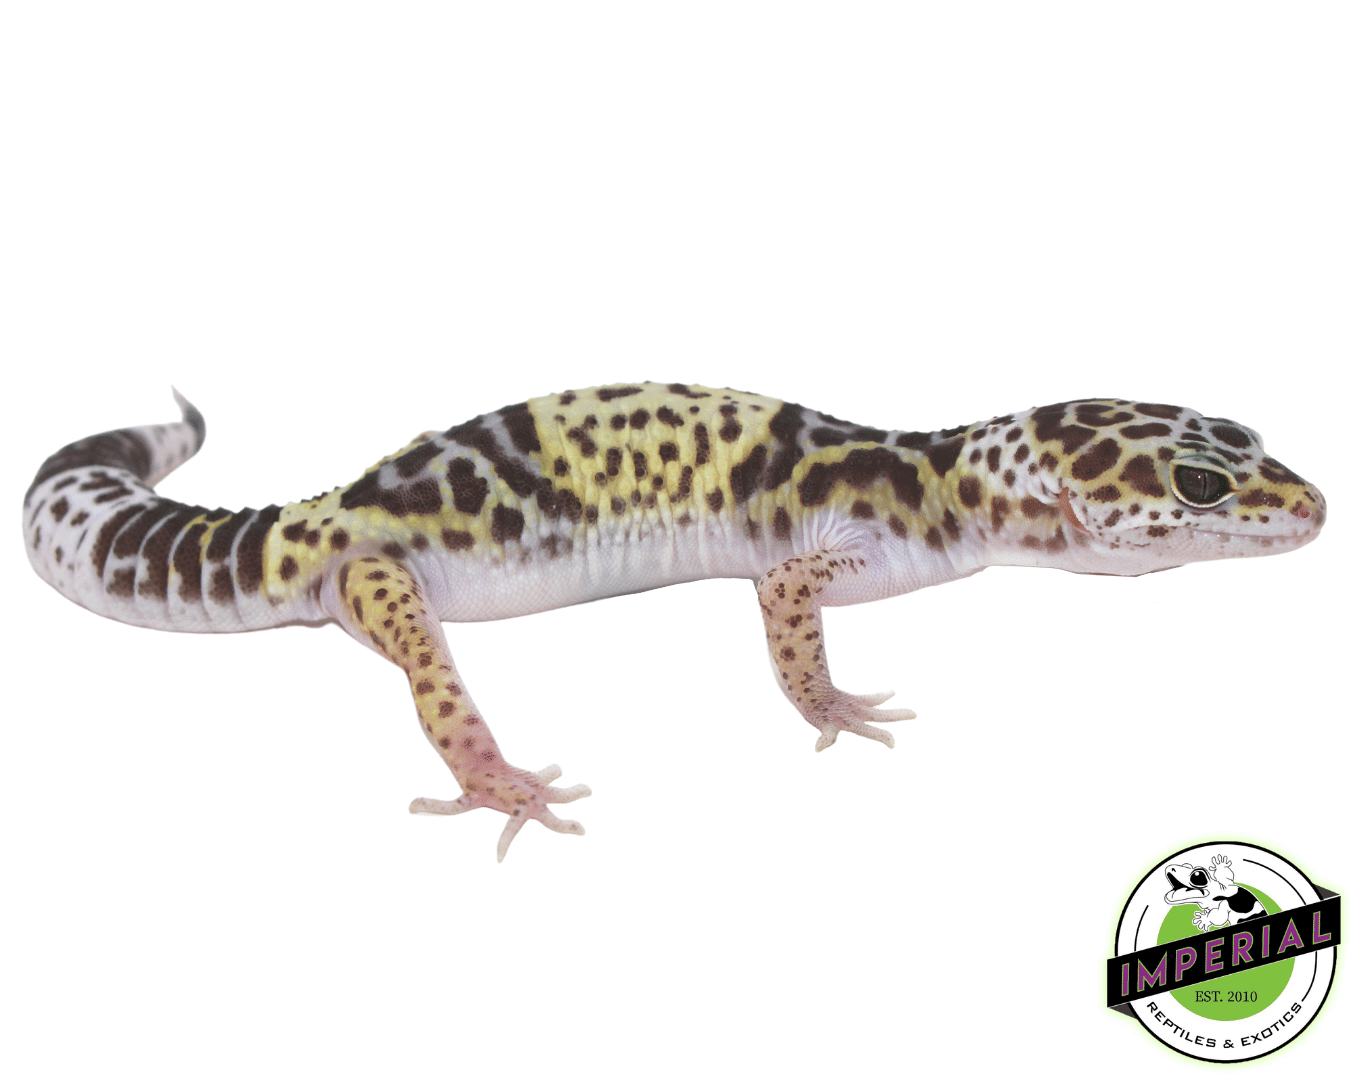 West Indian leopard gecko for sale, buy reptiles online